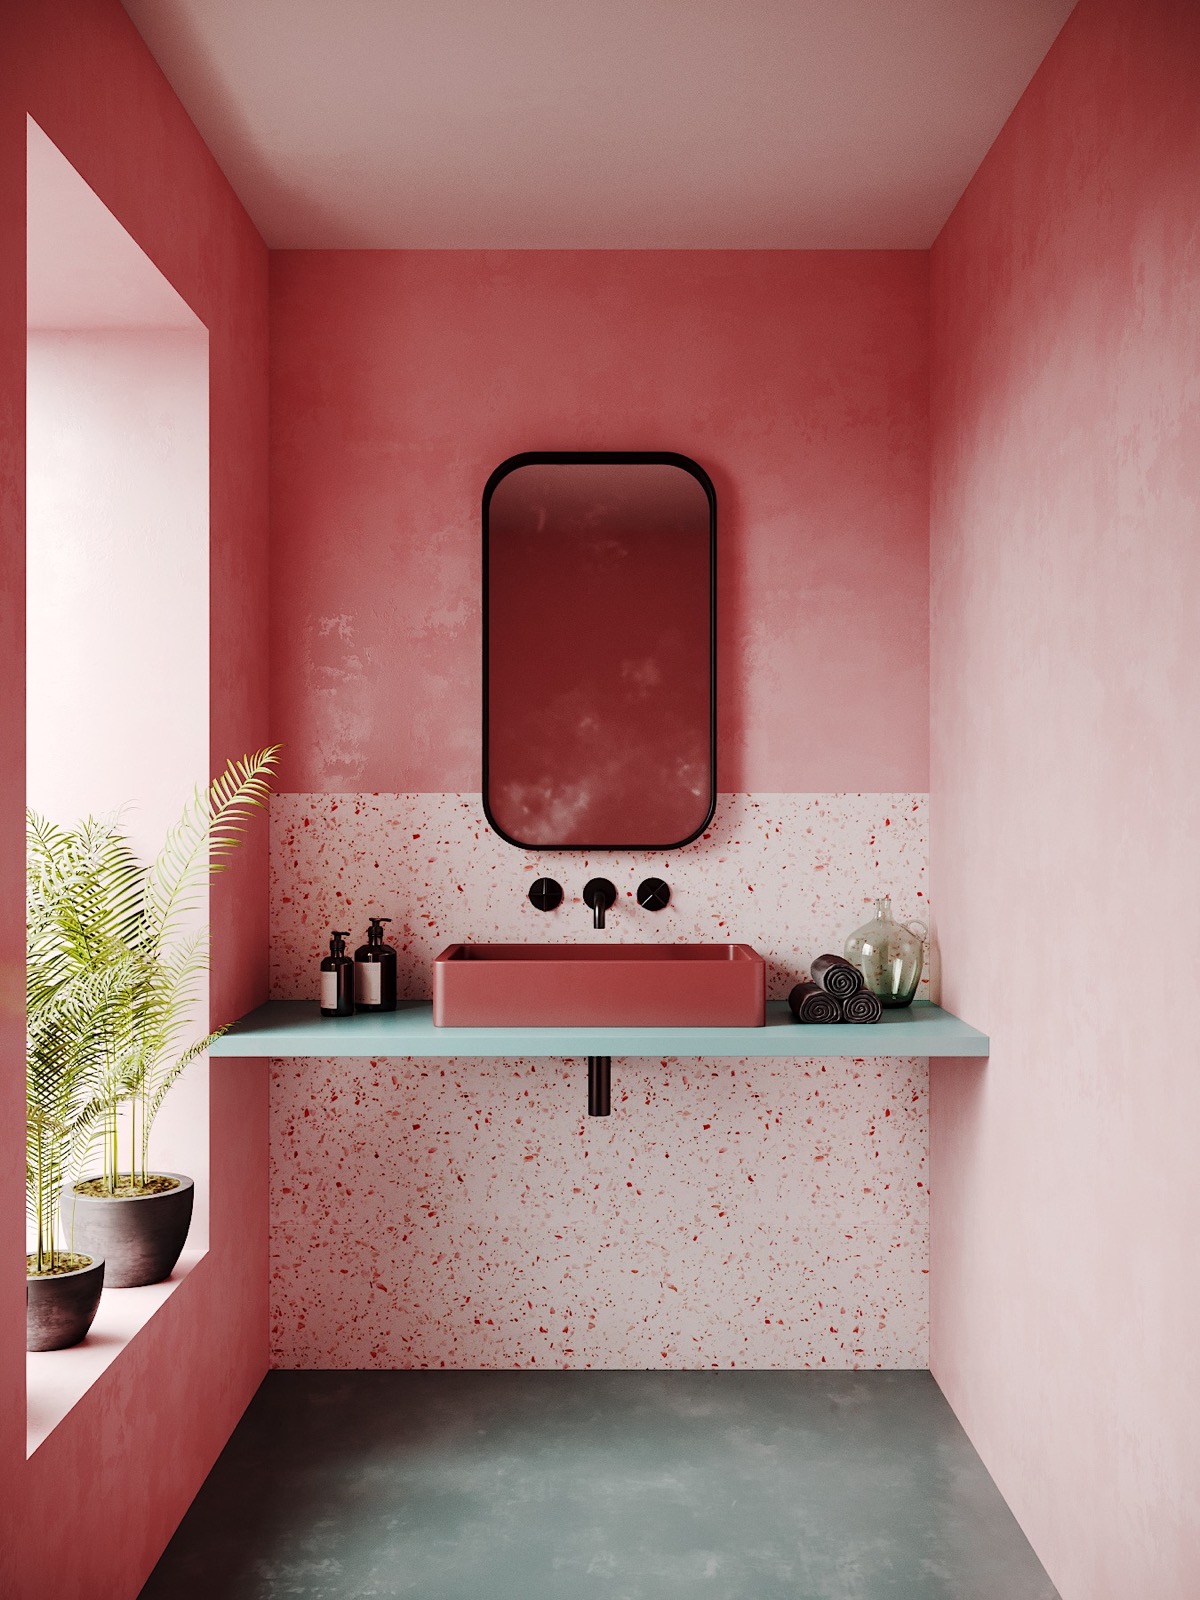 https://www.home-designing.com/wp-content/uploads/2019/11/how-to-make-a-pink-bathroom-look-modern.jpg